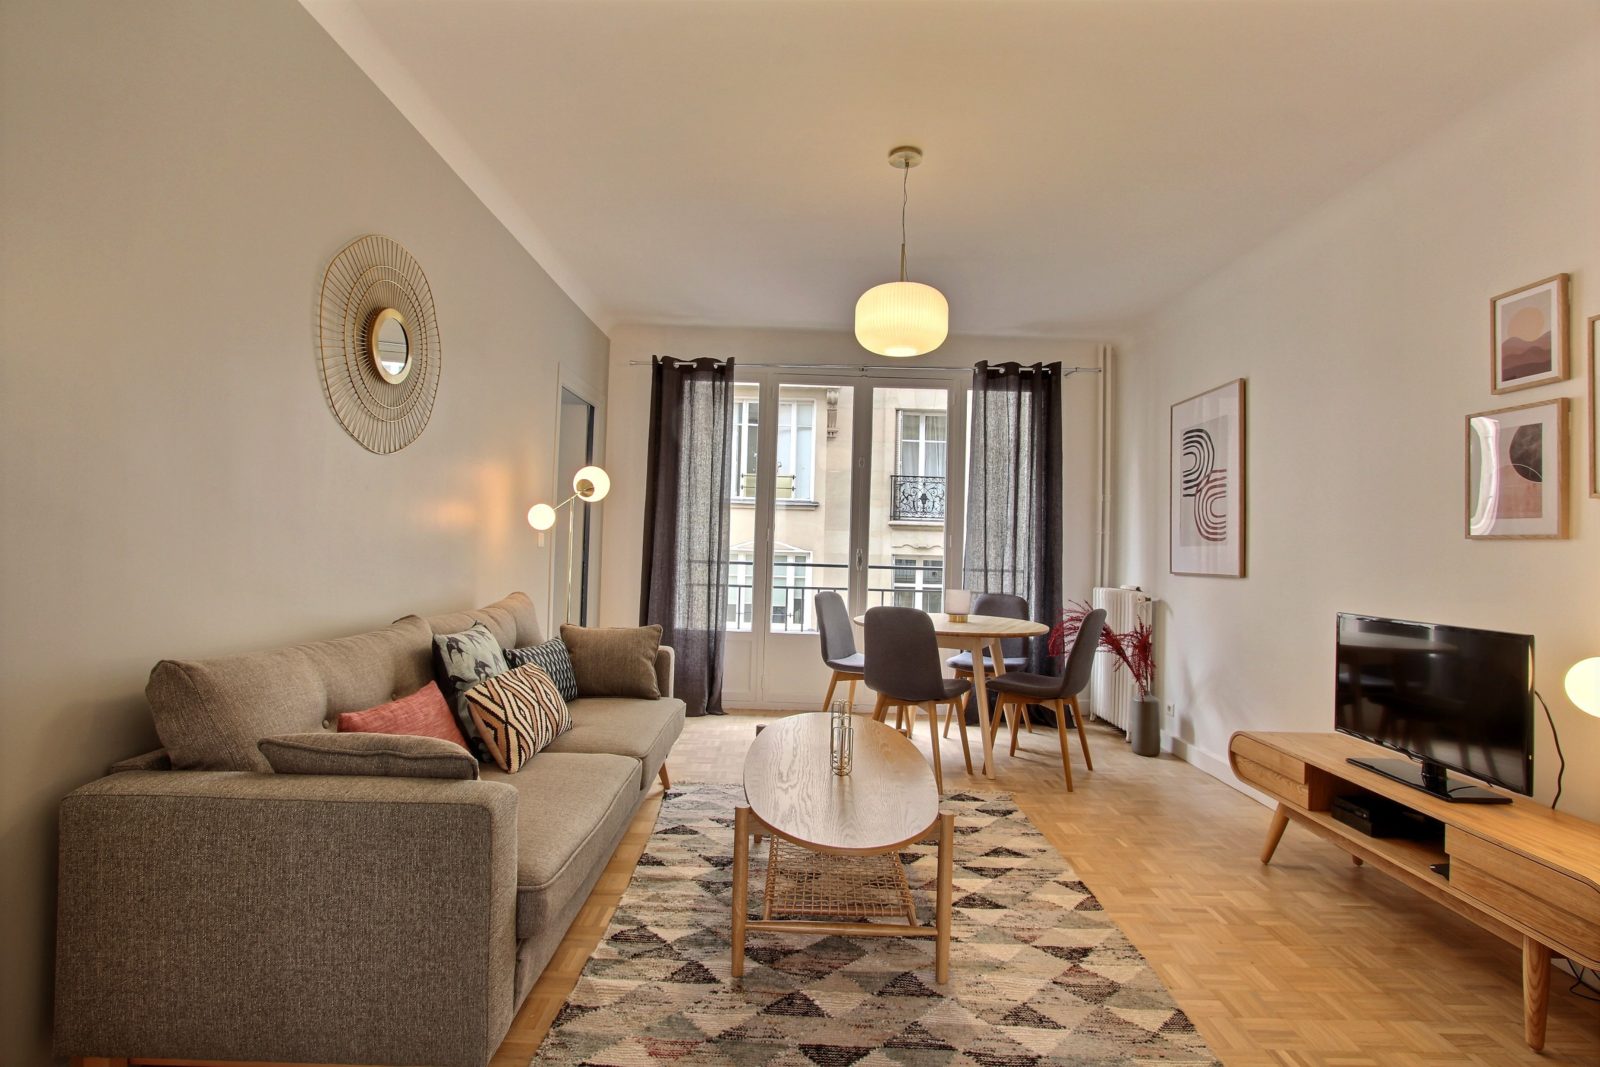 2 bedrooms apartment rental in Paris, Rue de Fleurus